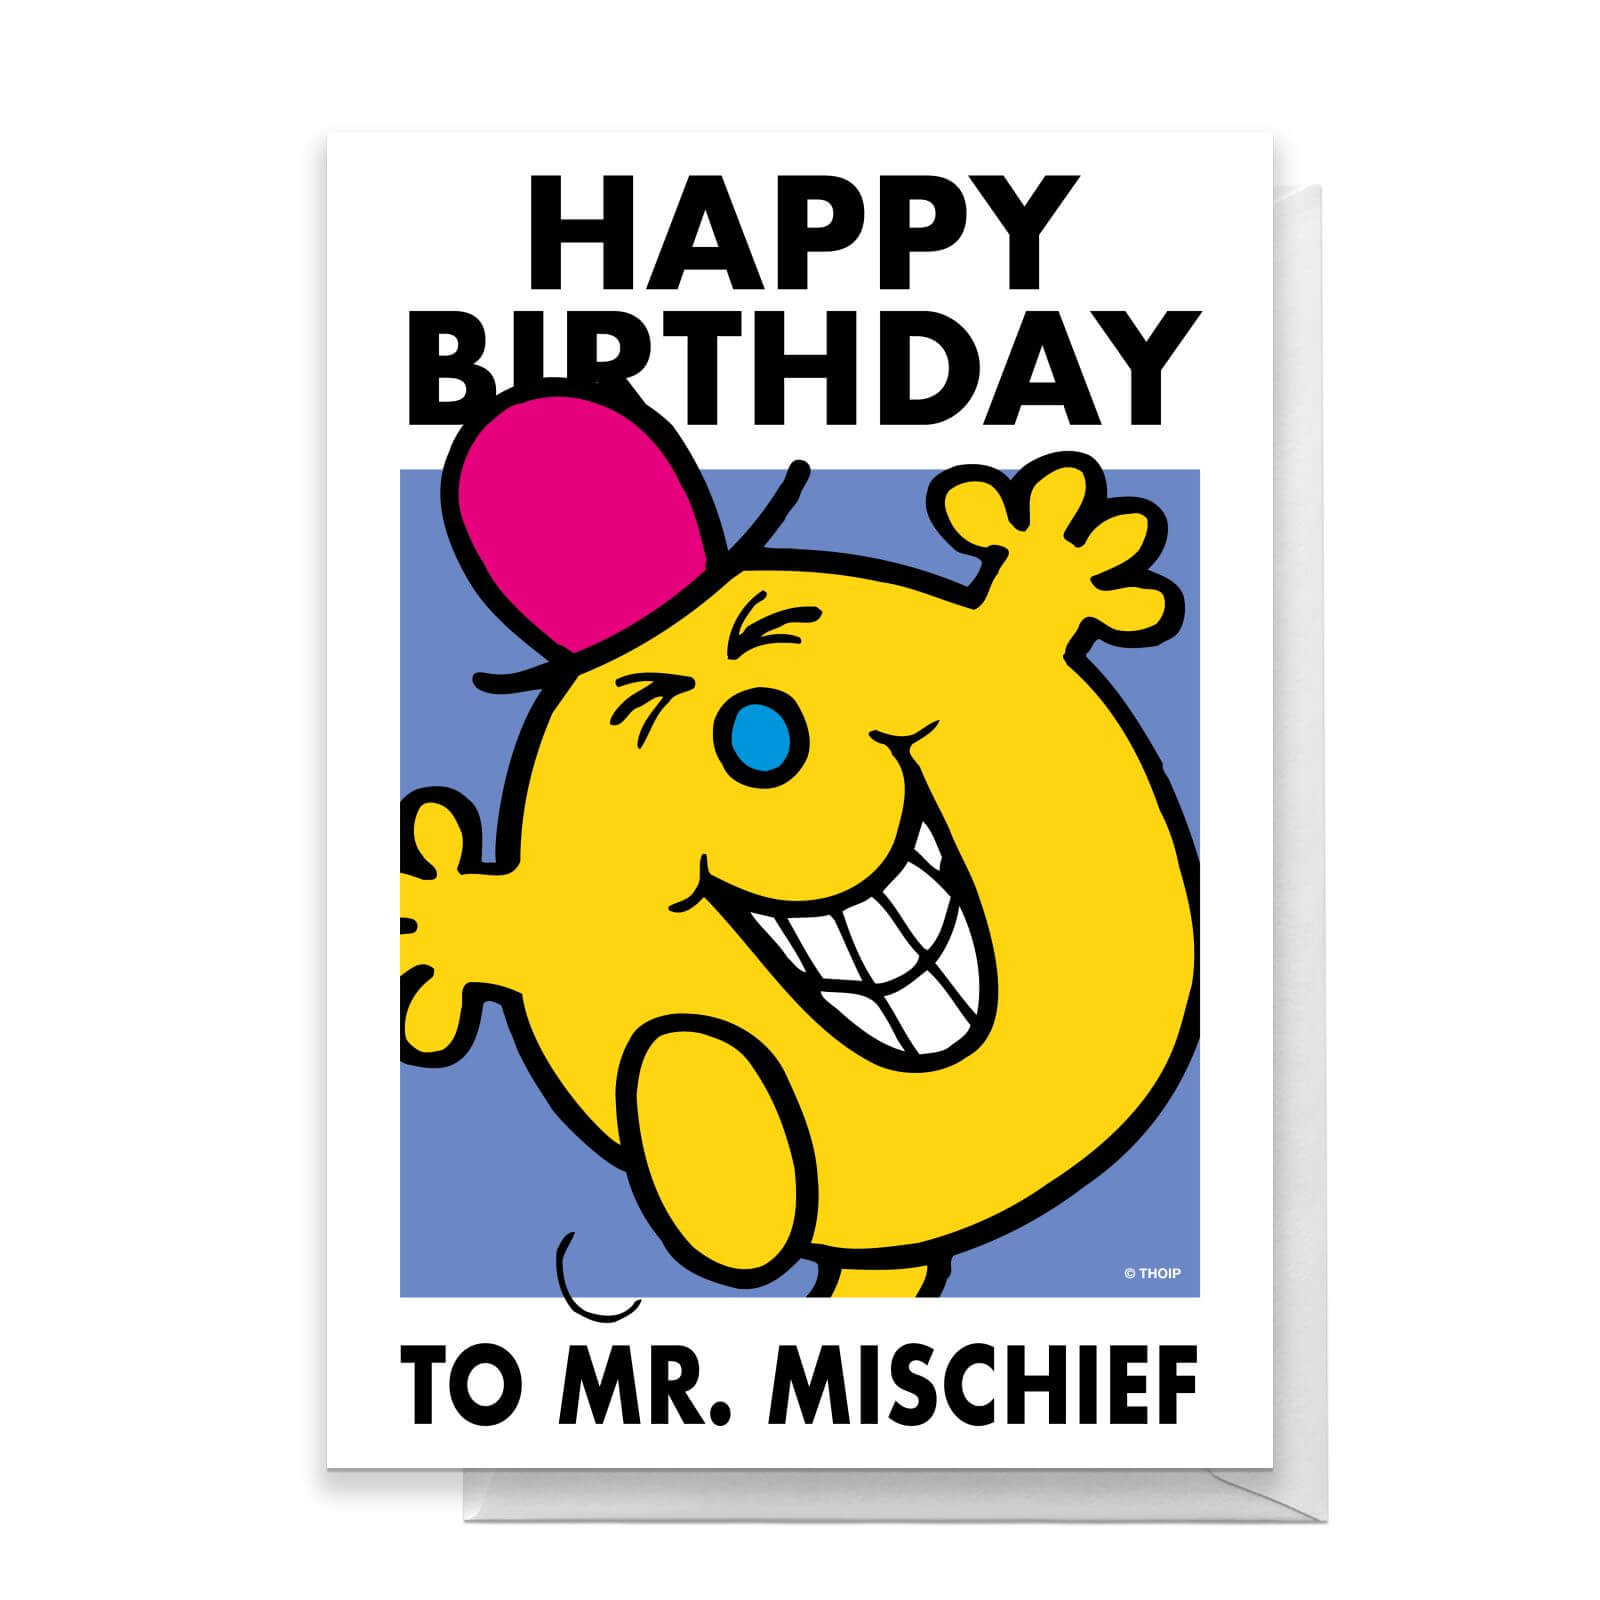 Mr Men & Little Miss Happy Birthday To Mr. Mischief Greetings Card - Standard Card